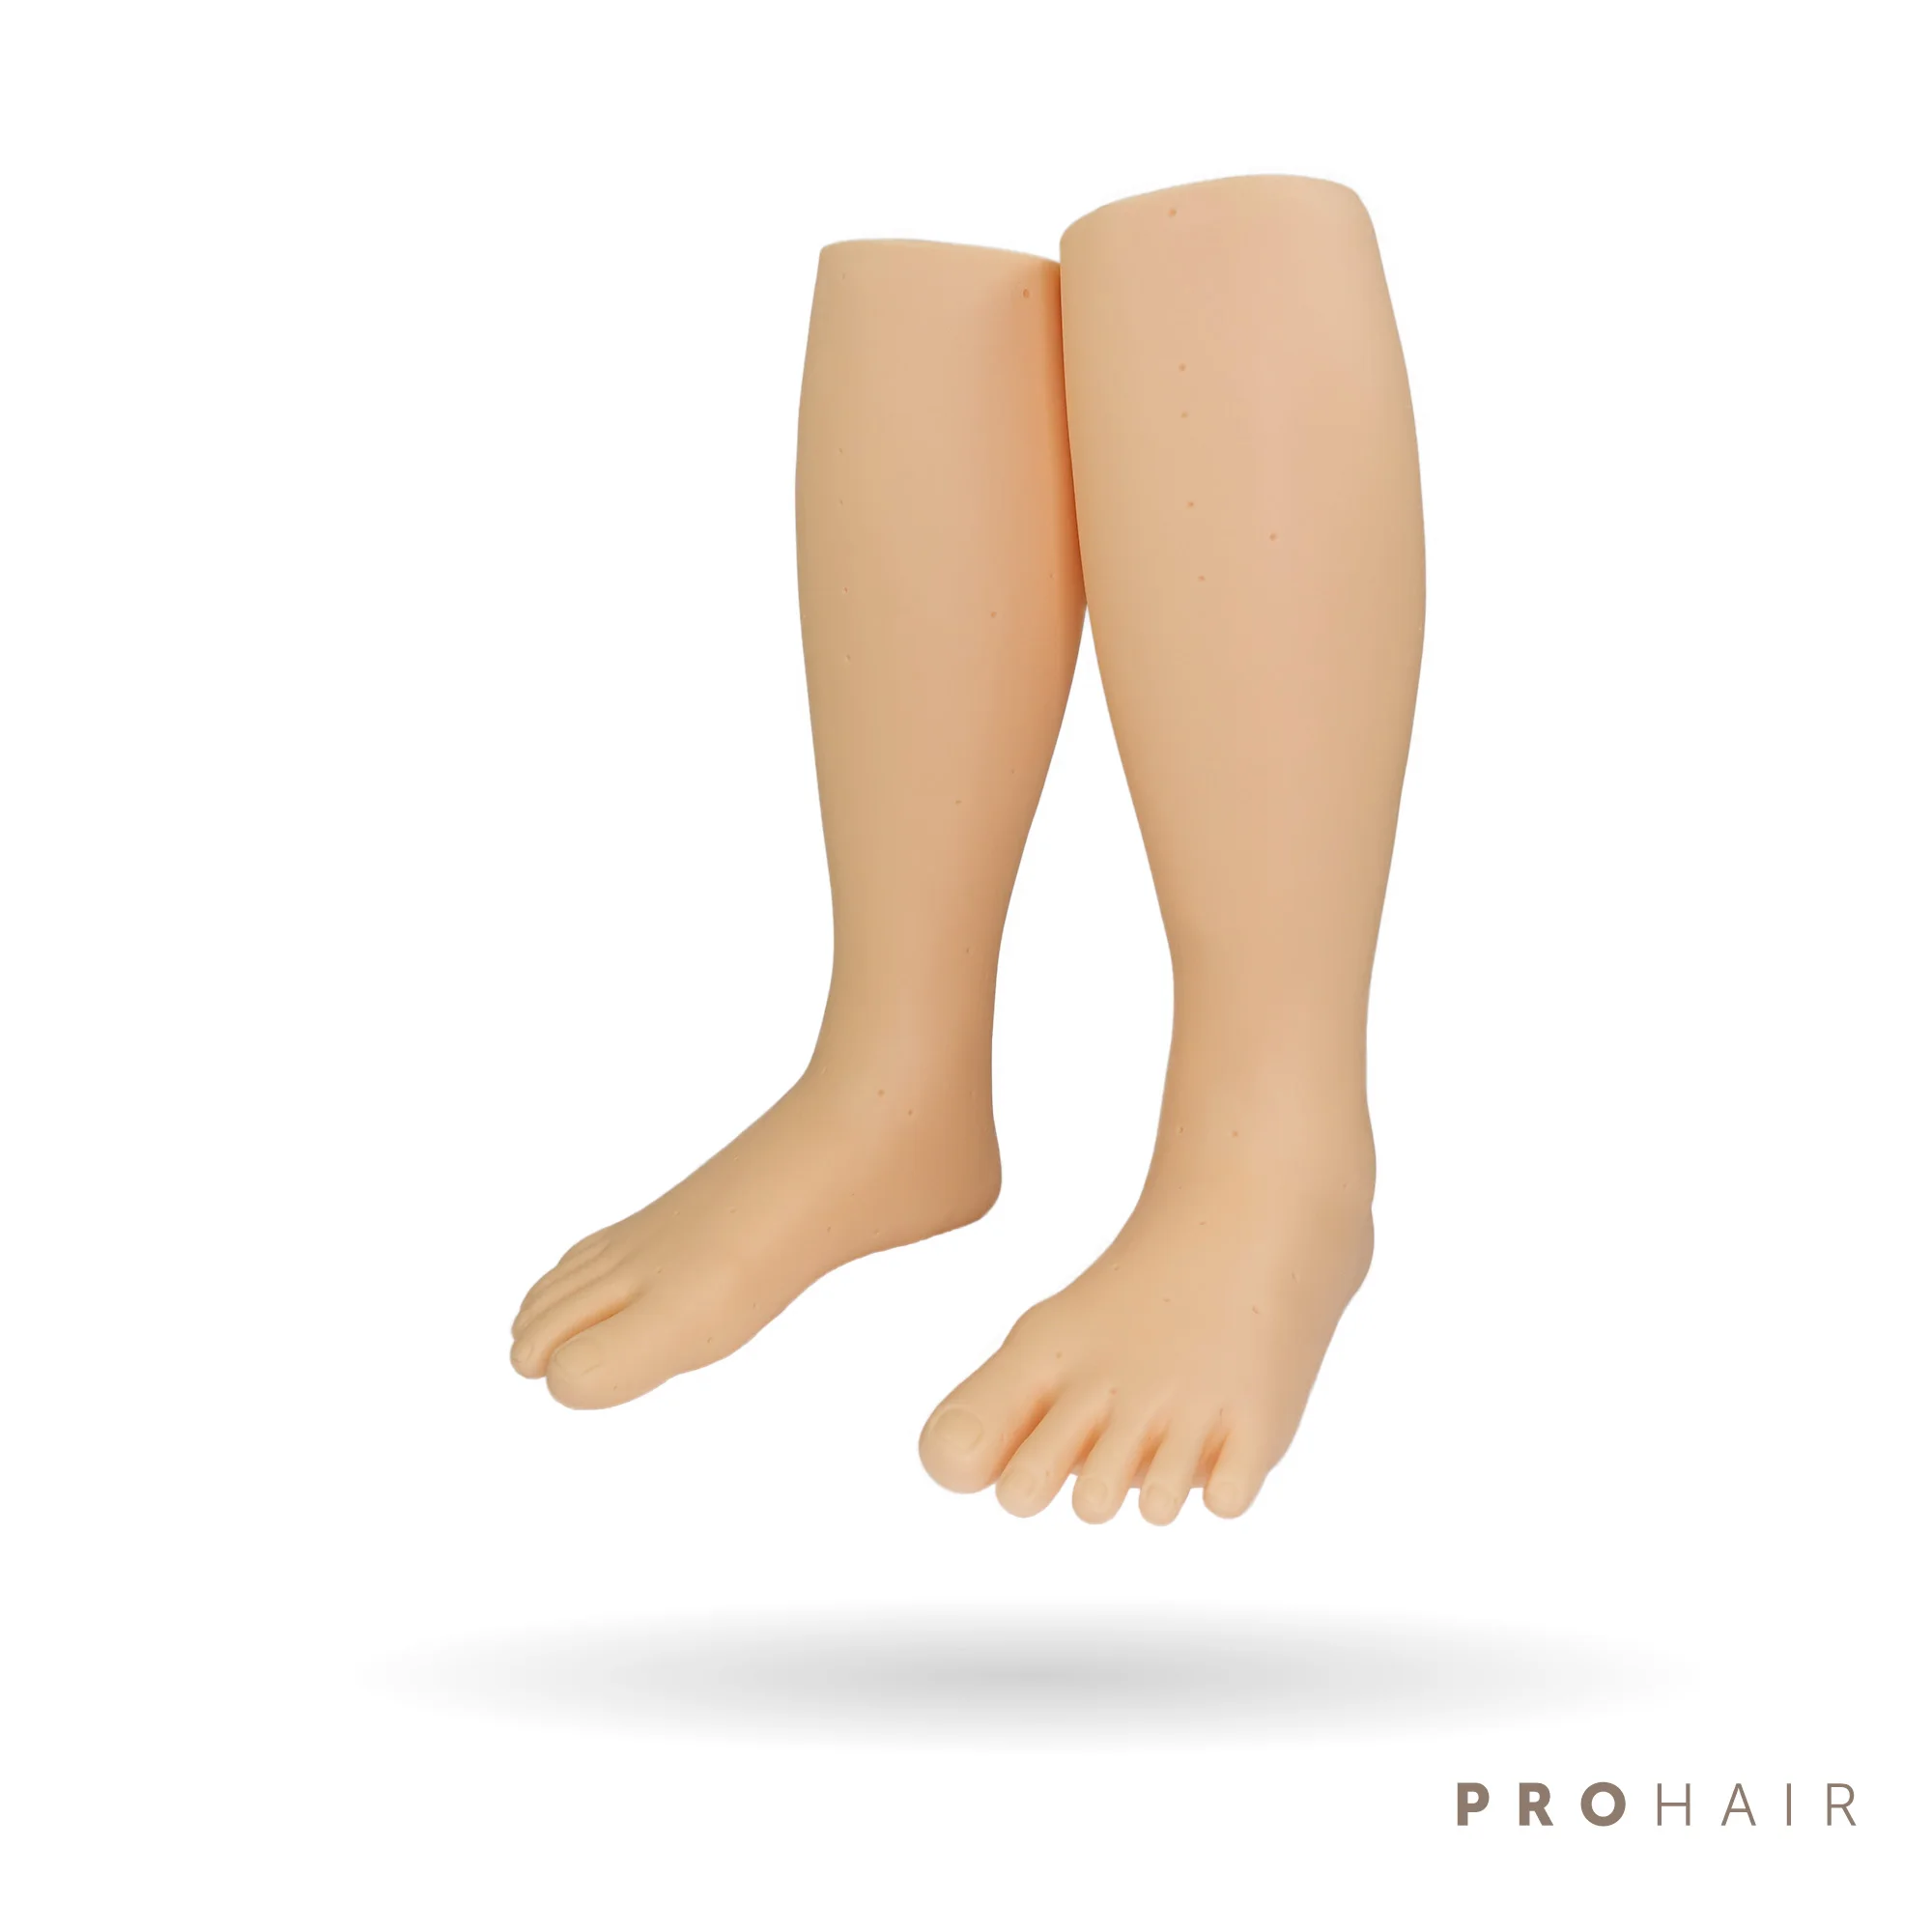 PROHAIR- Mannequin Foot for Massage Training Manikin Foot Practice Model